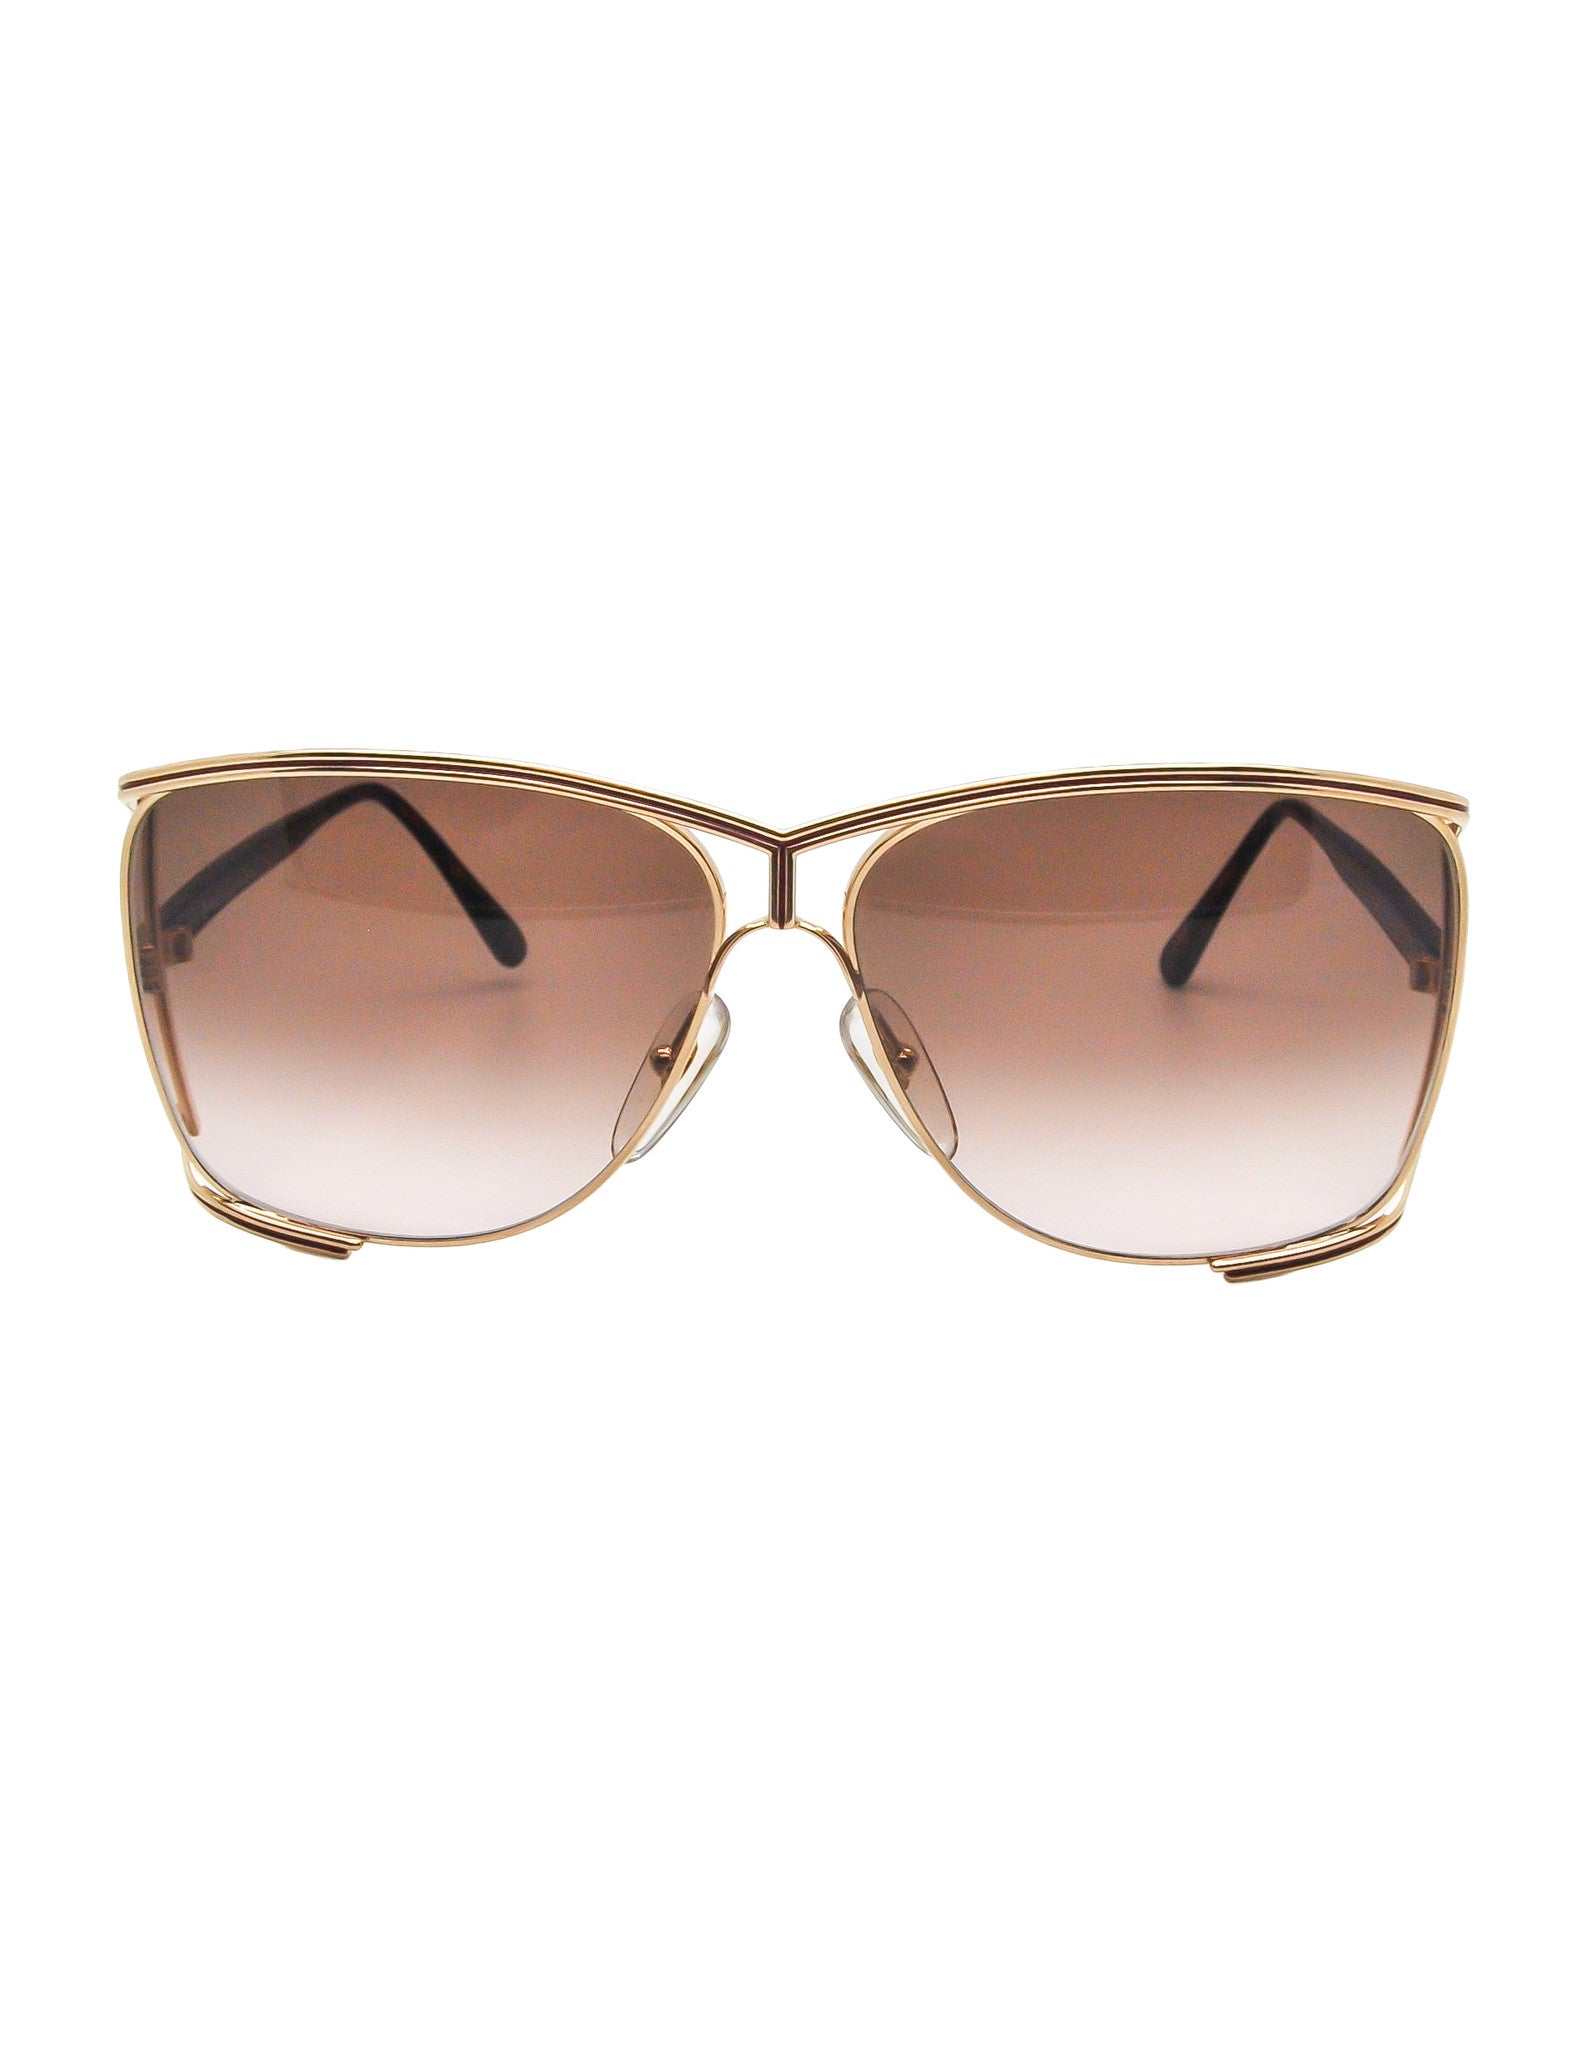 Christian Dior Vintage Gold Tortoise Sunglasses 2688